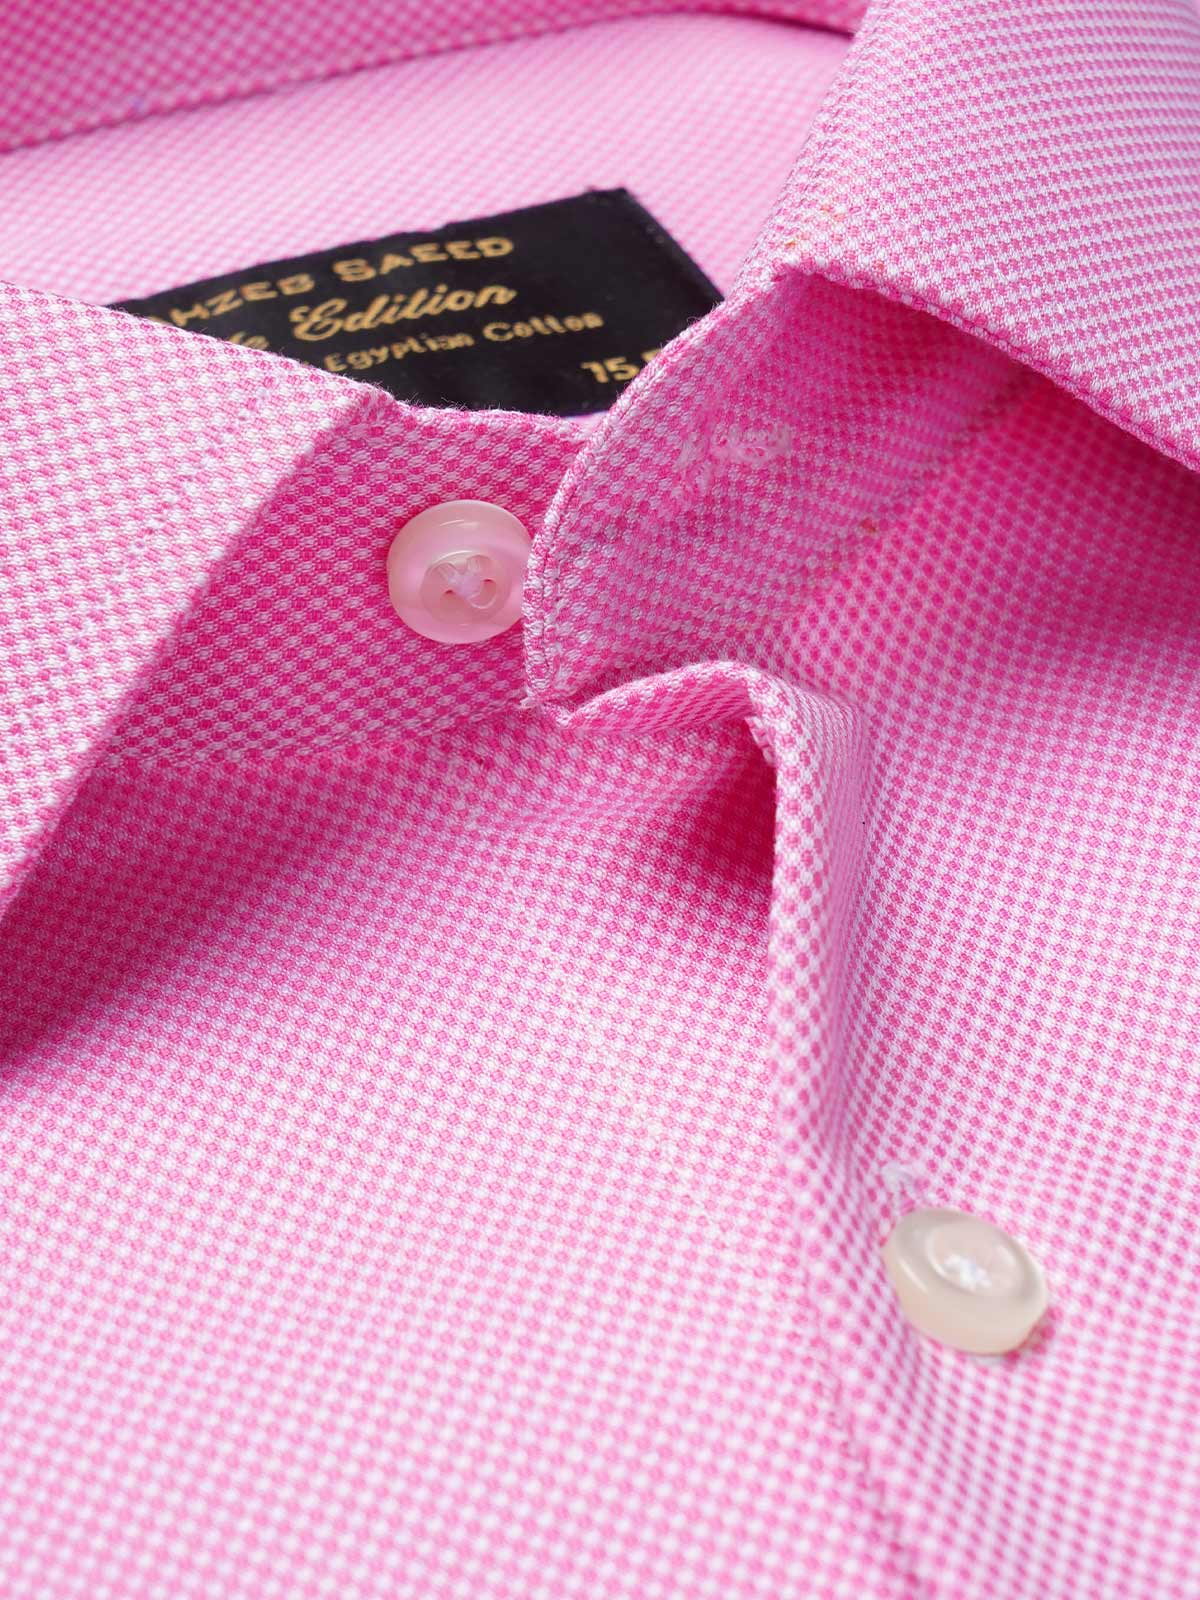 Pink Self, Elite Edition, French Collar Men’s Formal Shirt (FS-711)